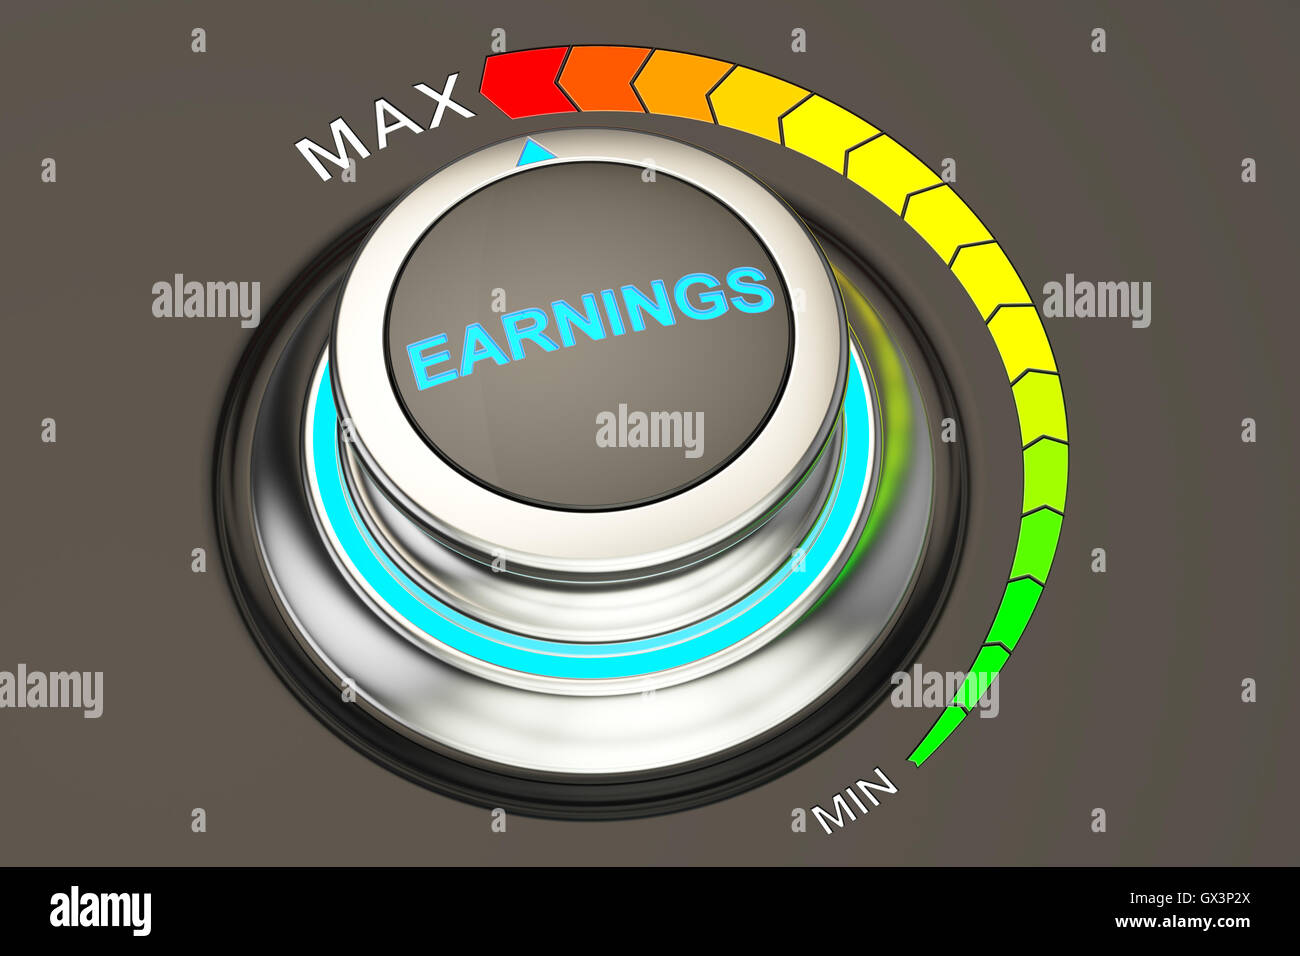 earnings concept, highest level of earnings. 3D rendering Stock Photo